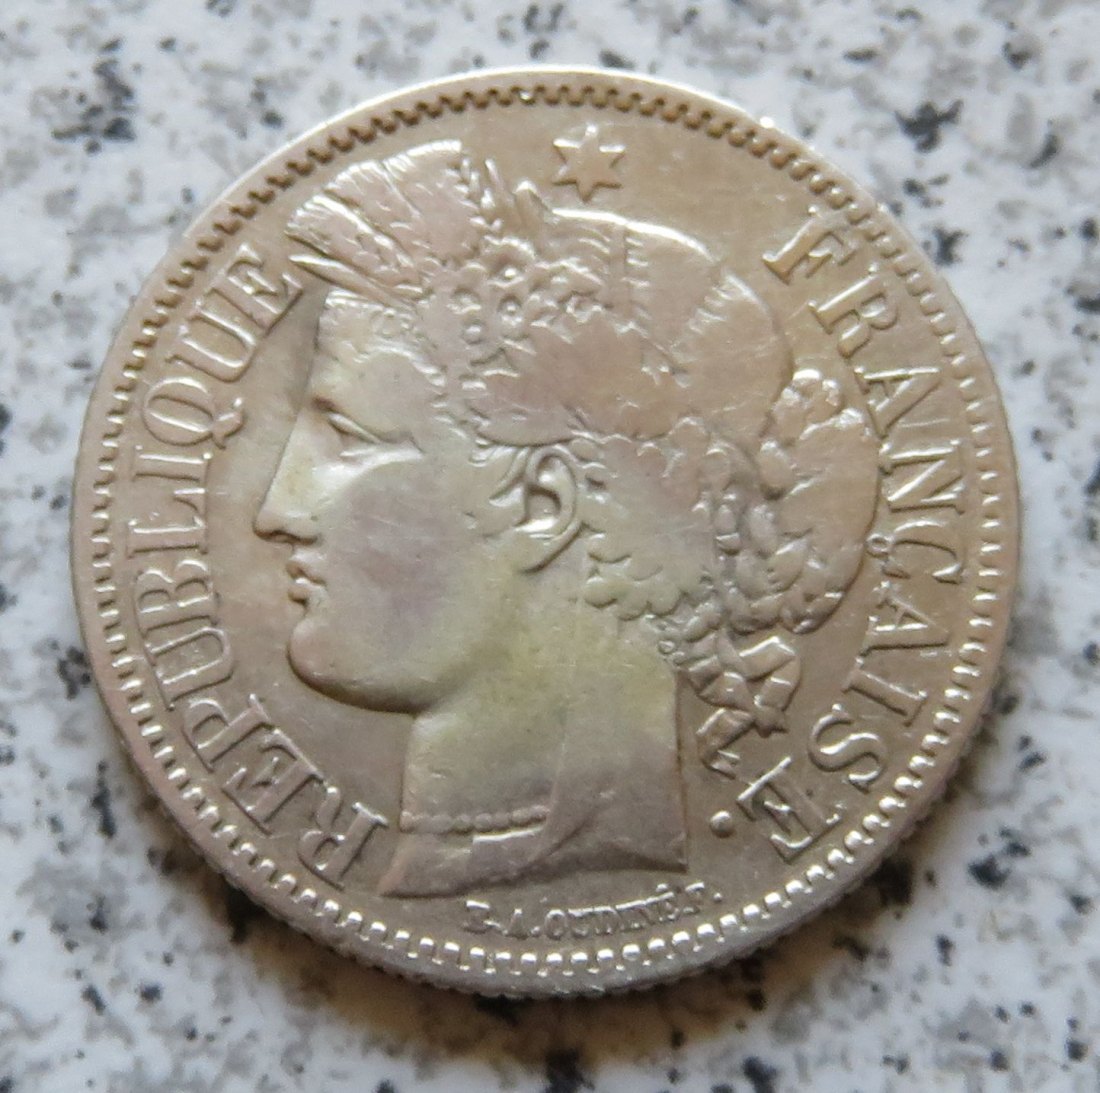  Frankreich 2 Francs 1871 K   